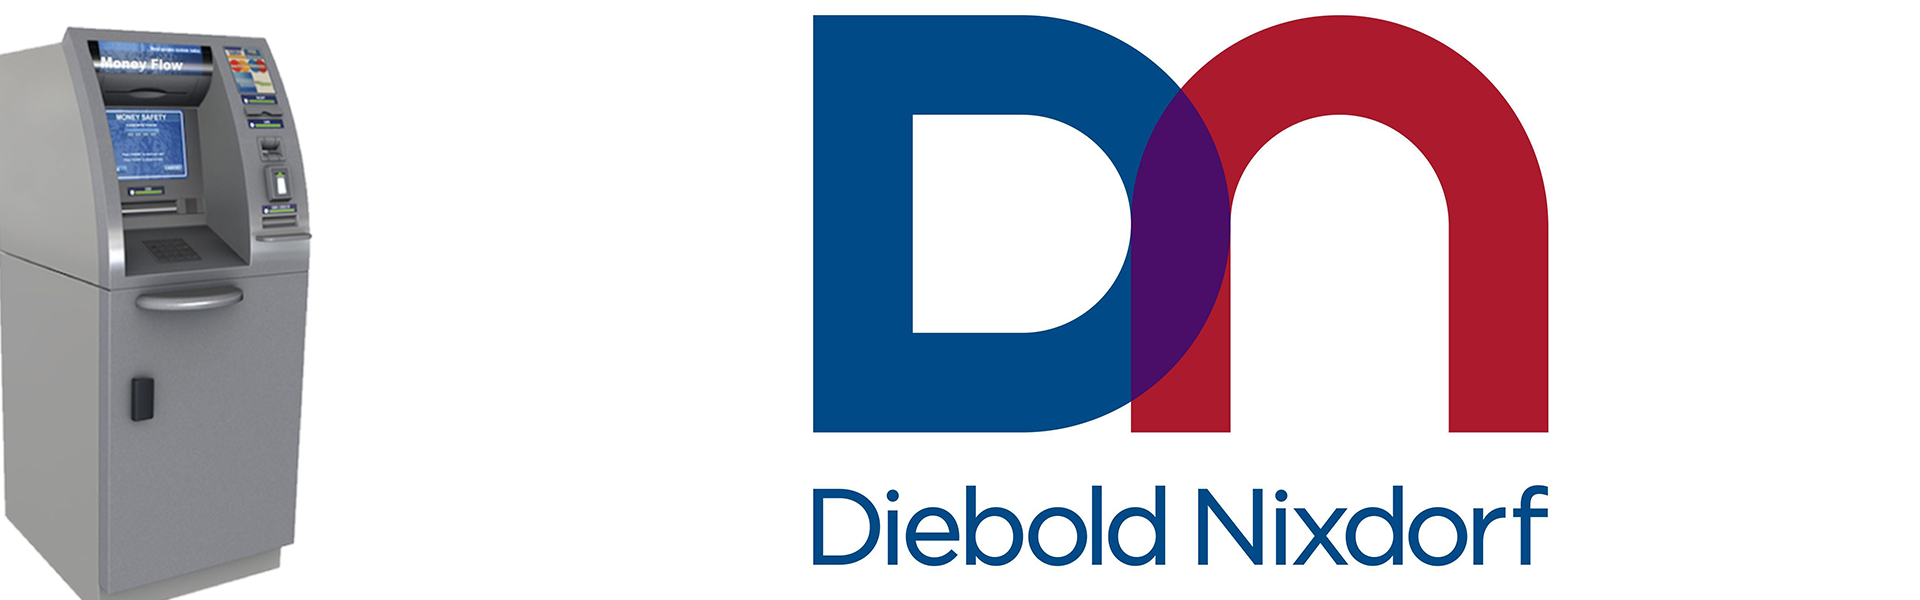 Partnership with DIEBOLD NIXDORF